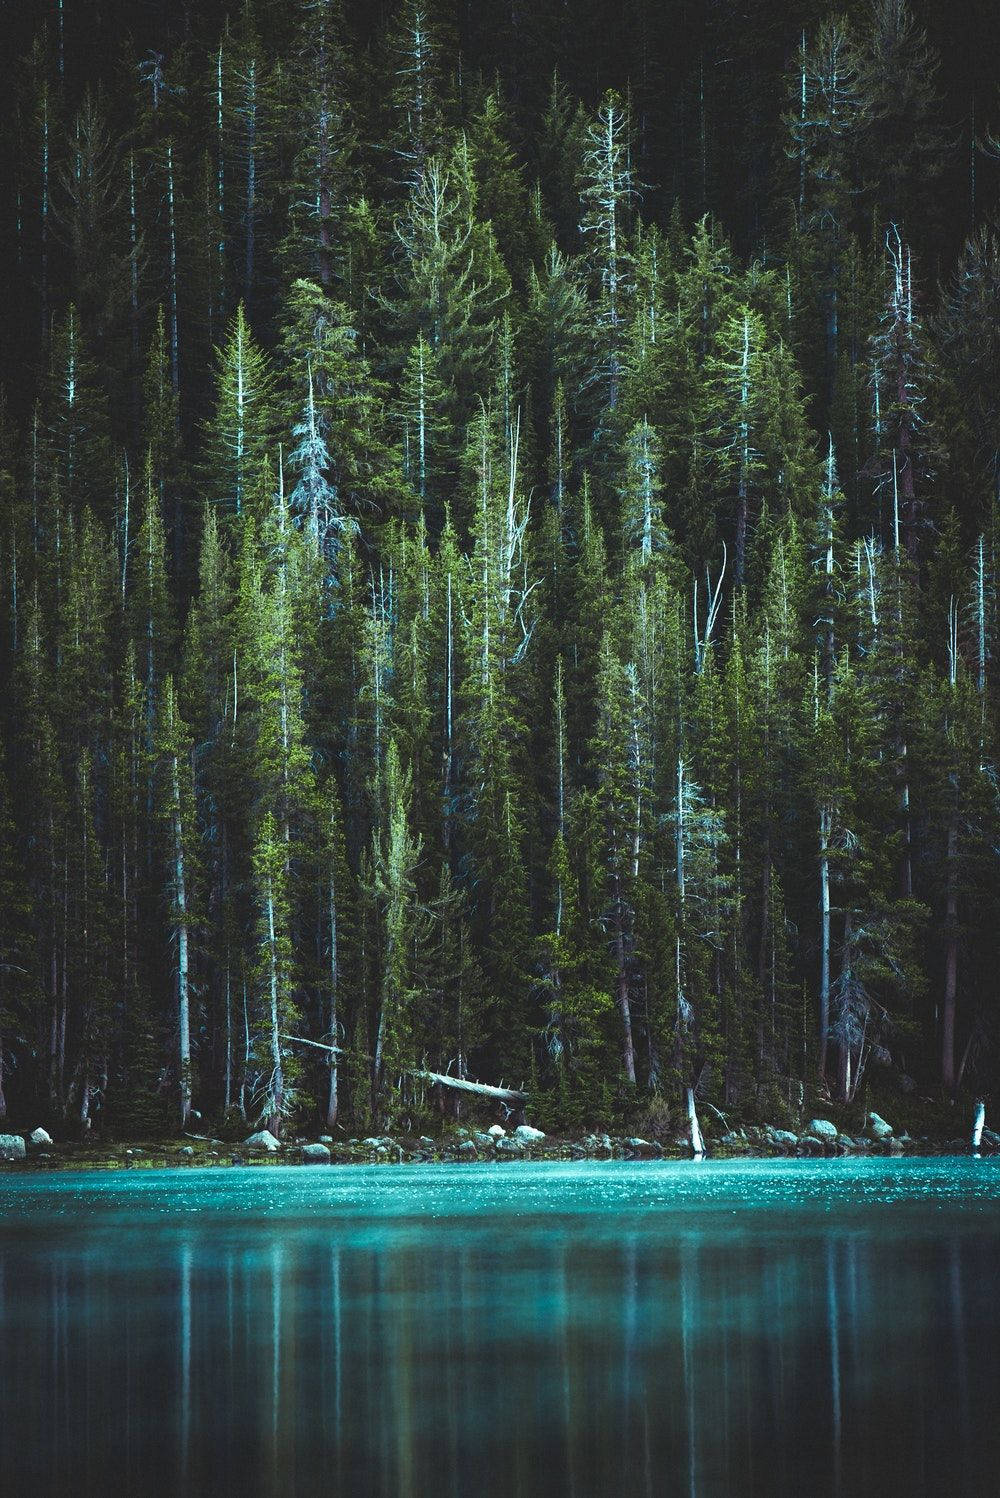 Green pine trees near body of water during daytime - Dark green